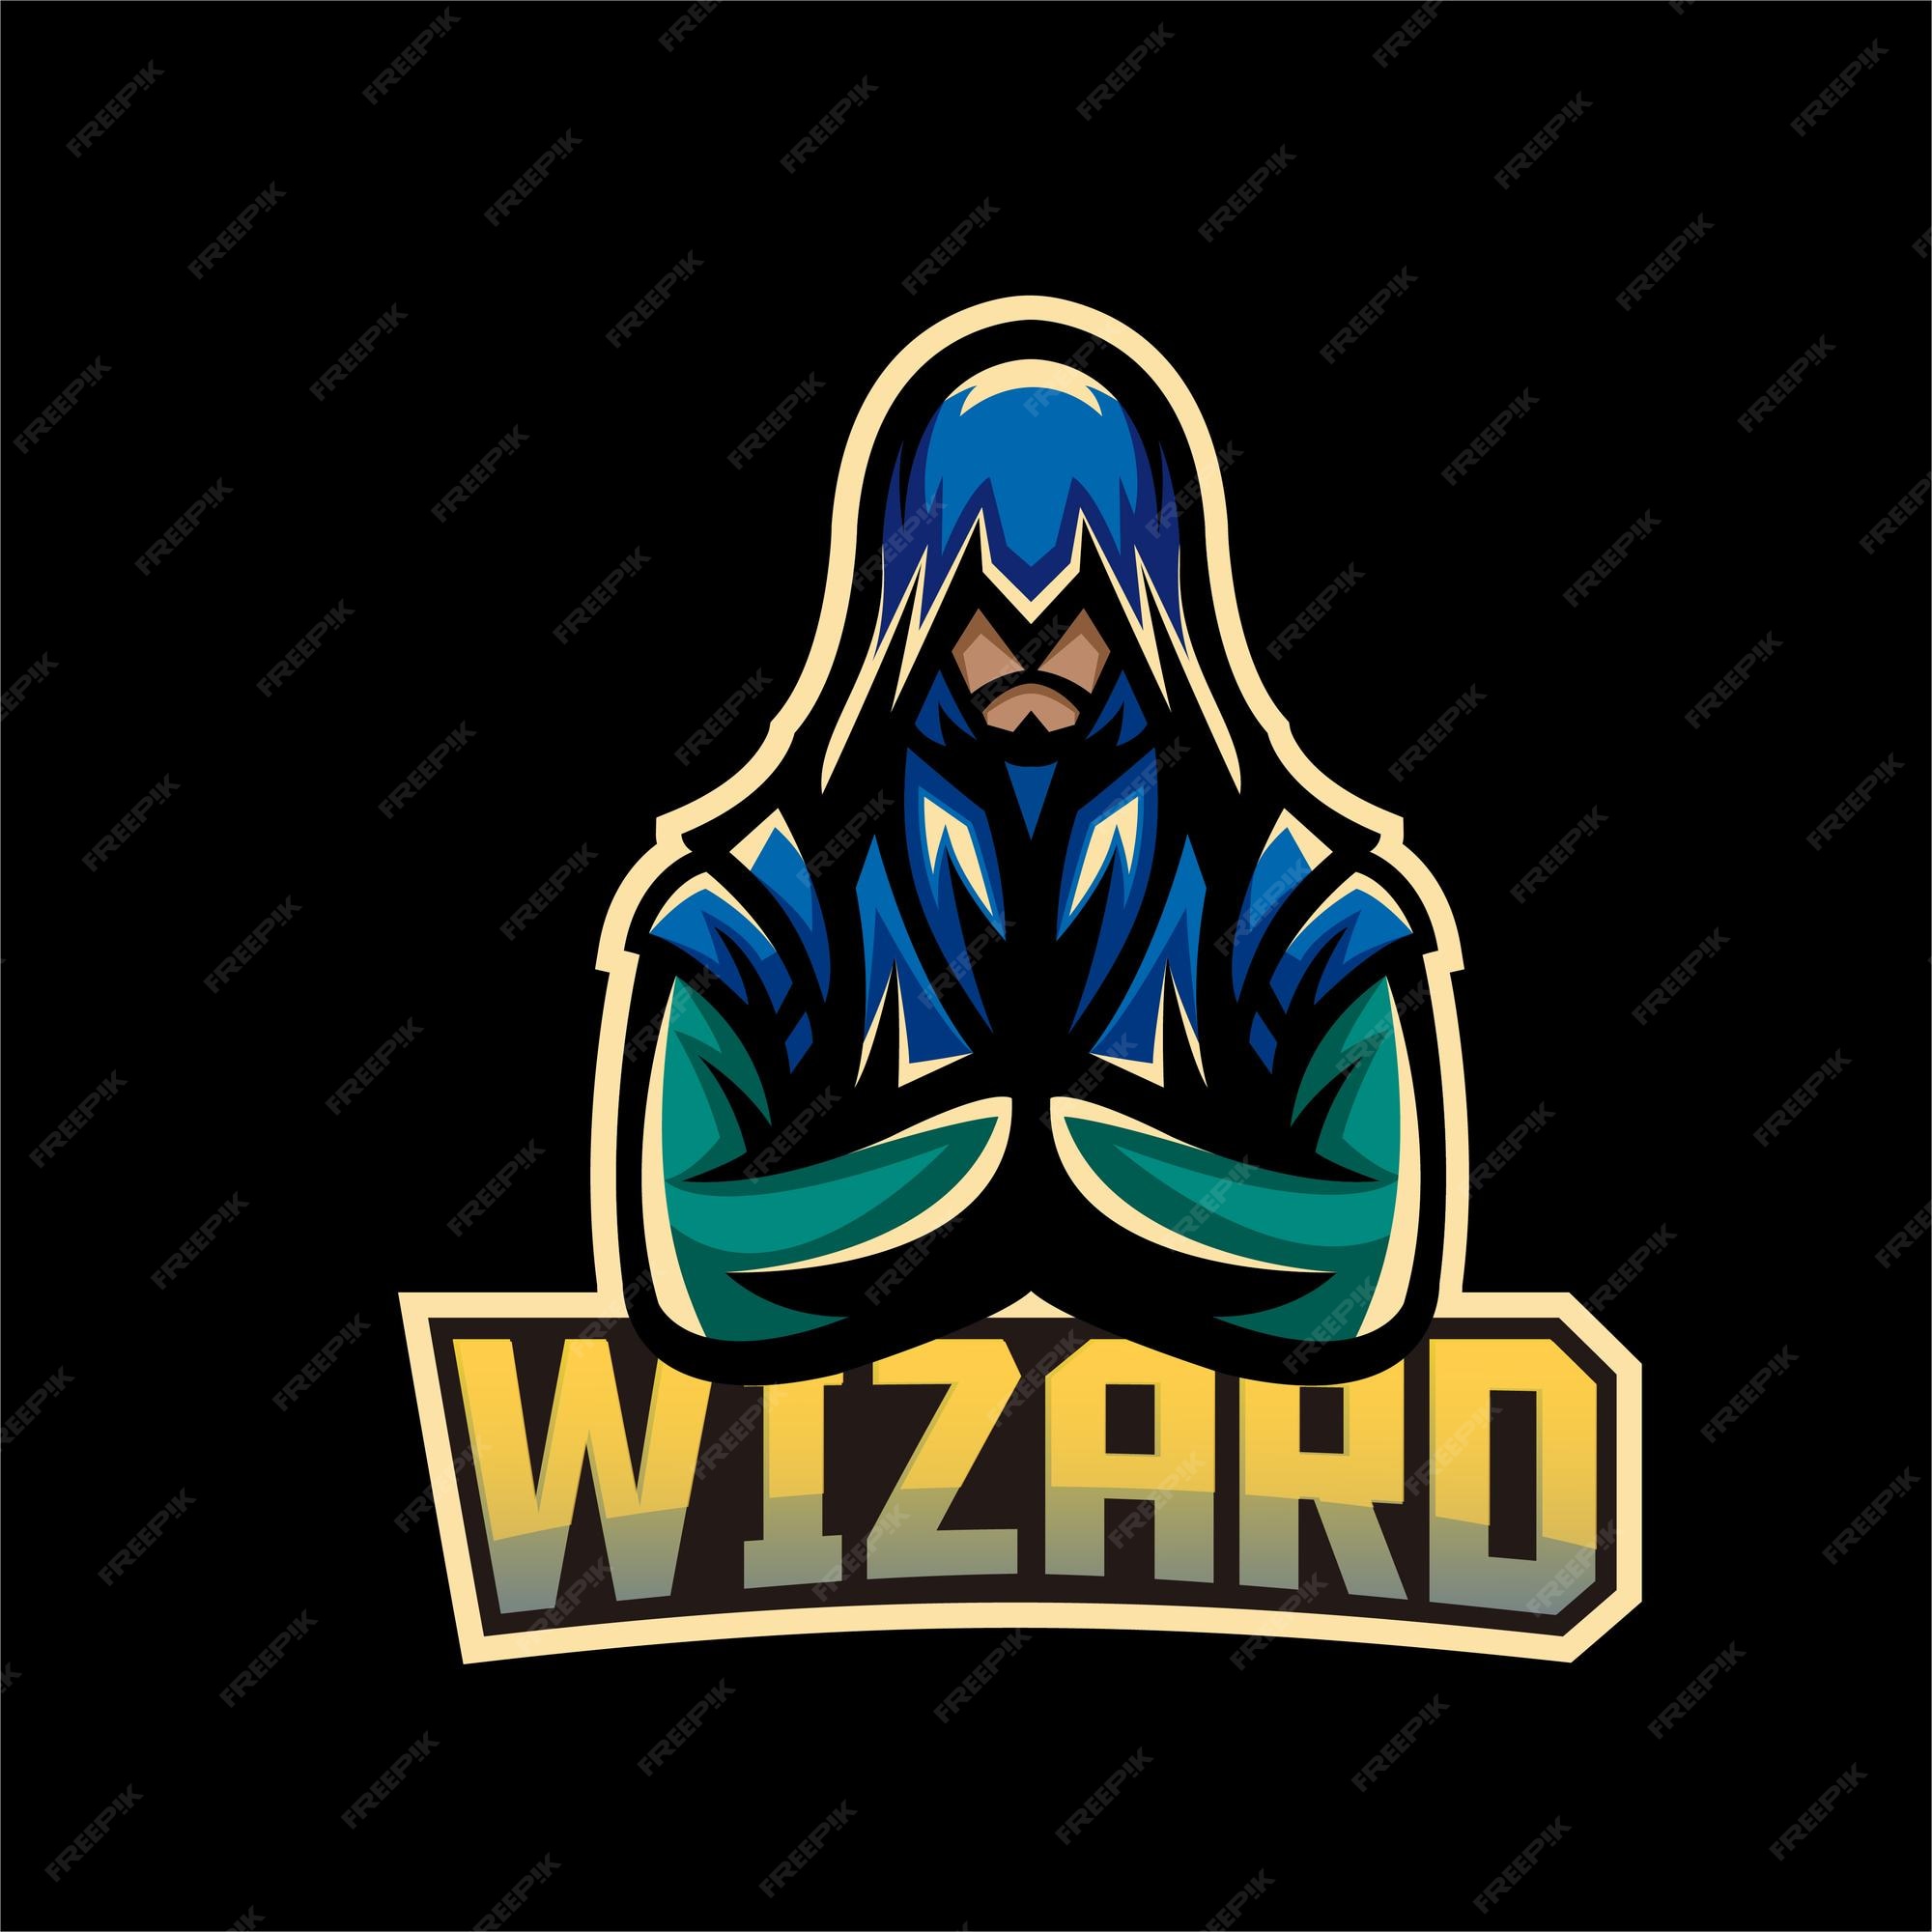 Free Vector | Wizard esport mascot logo gaming team